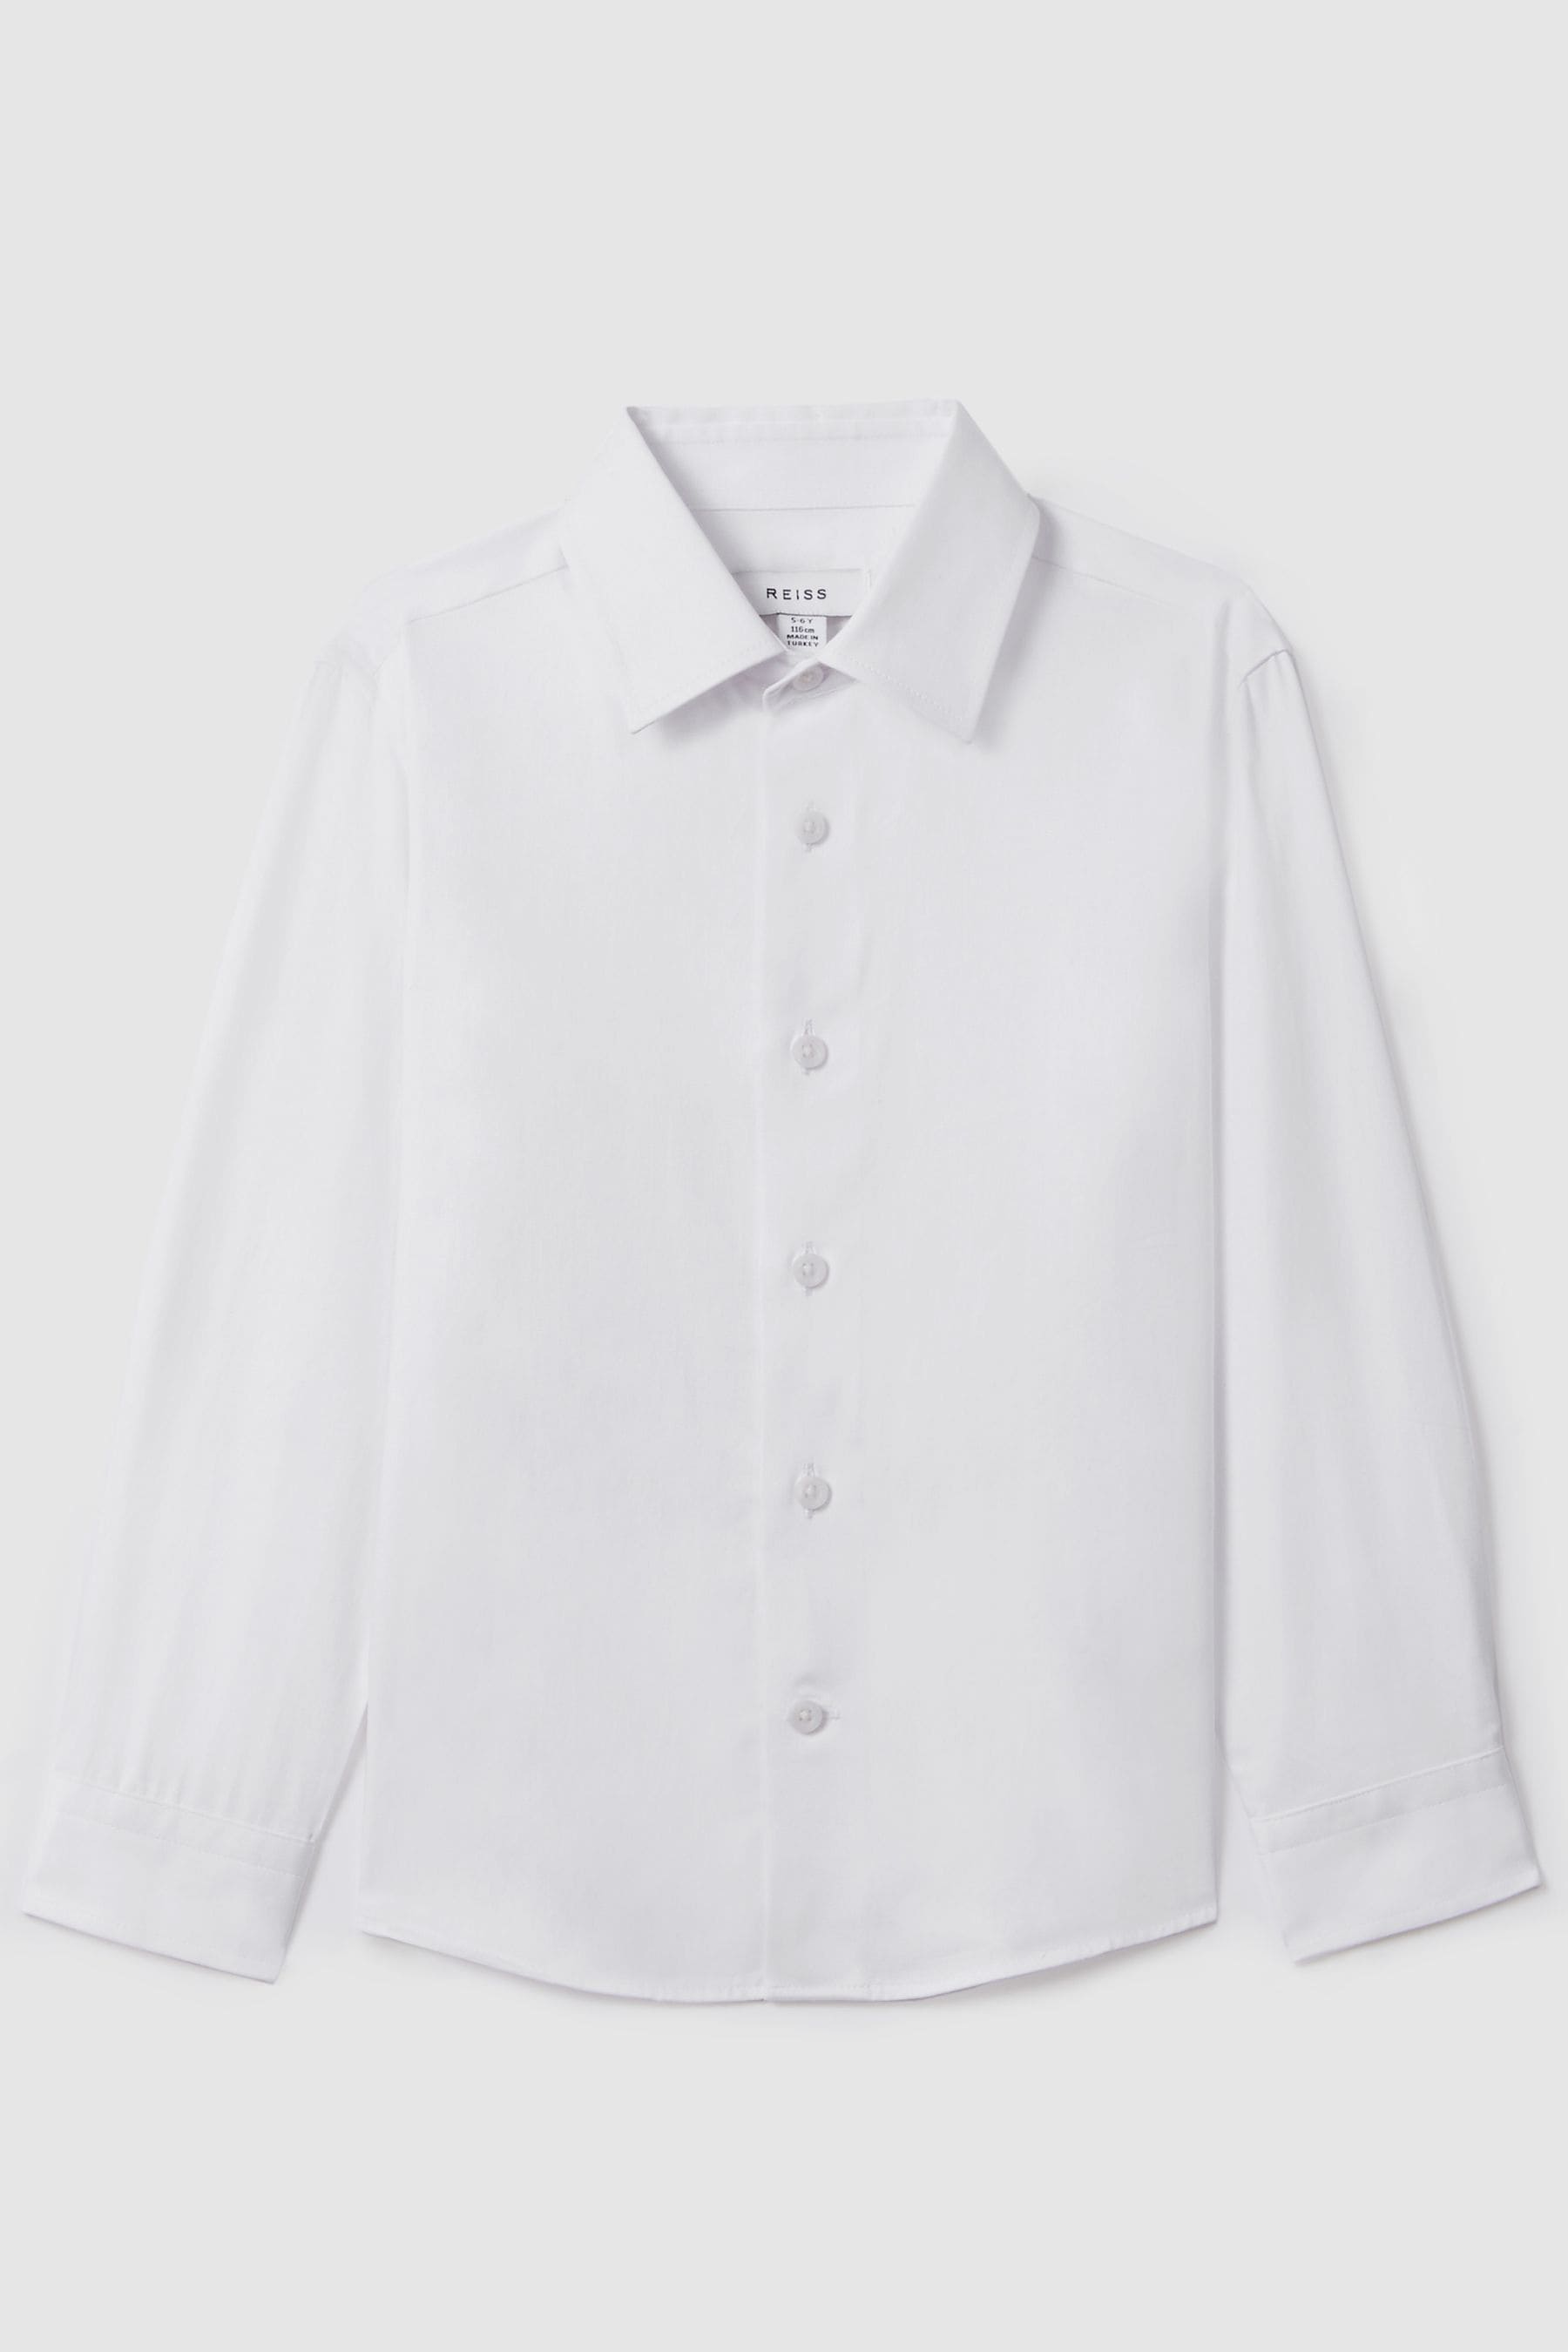 Reiss Remote - White Slim Fit Cotton Shirt, Uk 13-14 Yrs